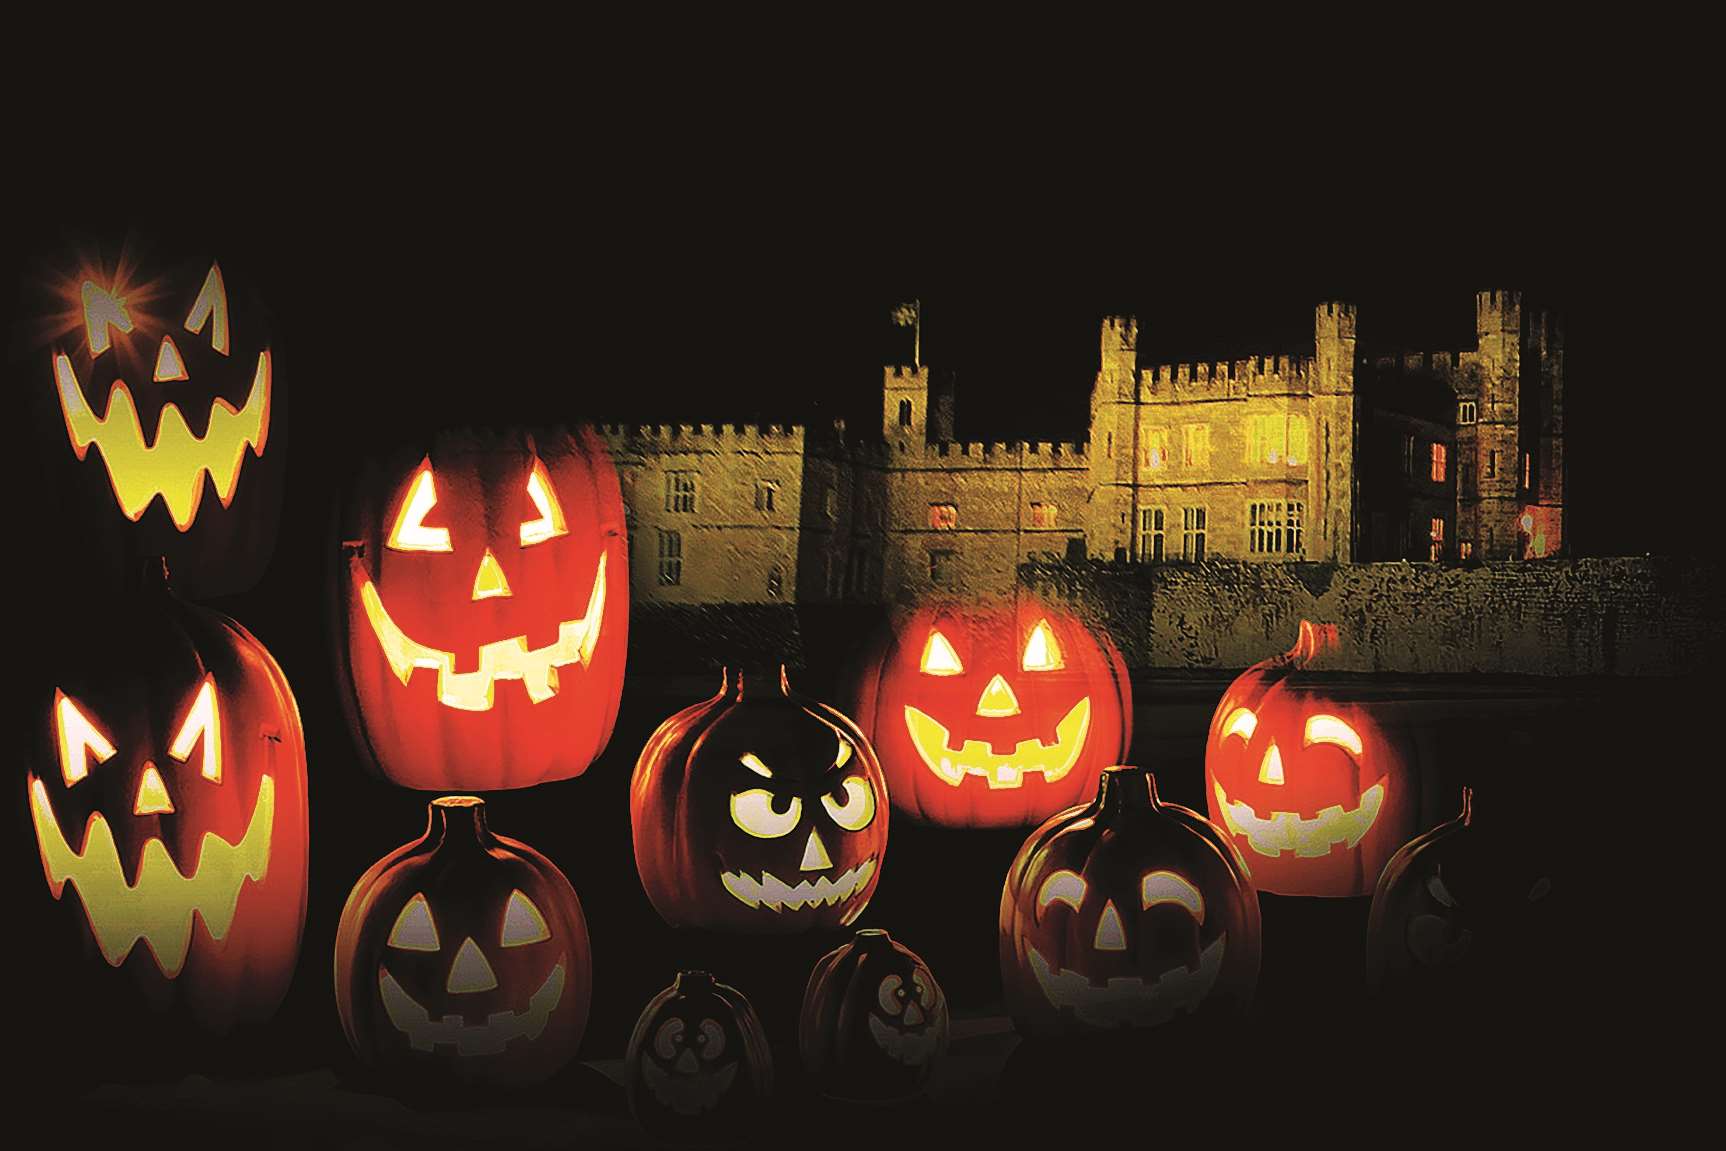 Halloween fun at Leeds Castle lasts until Sunday, October 29